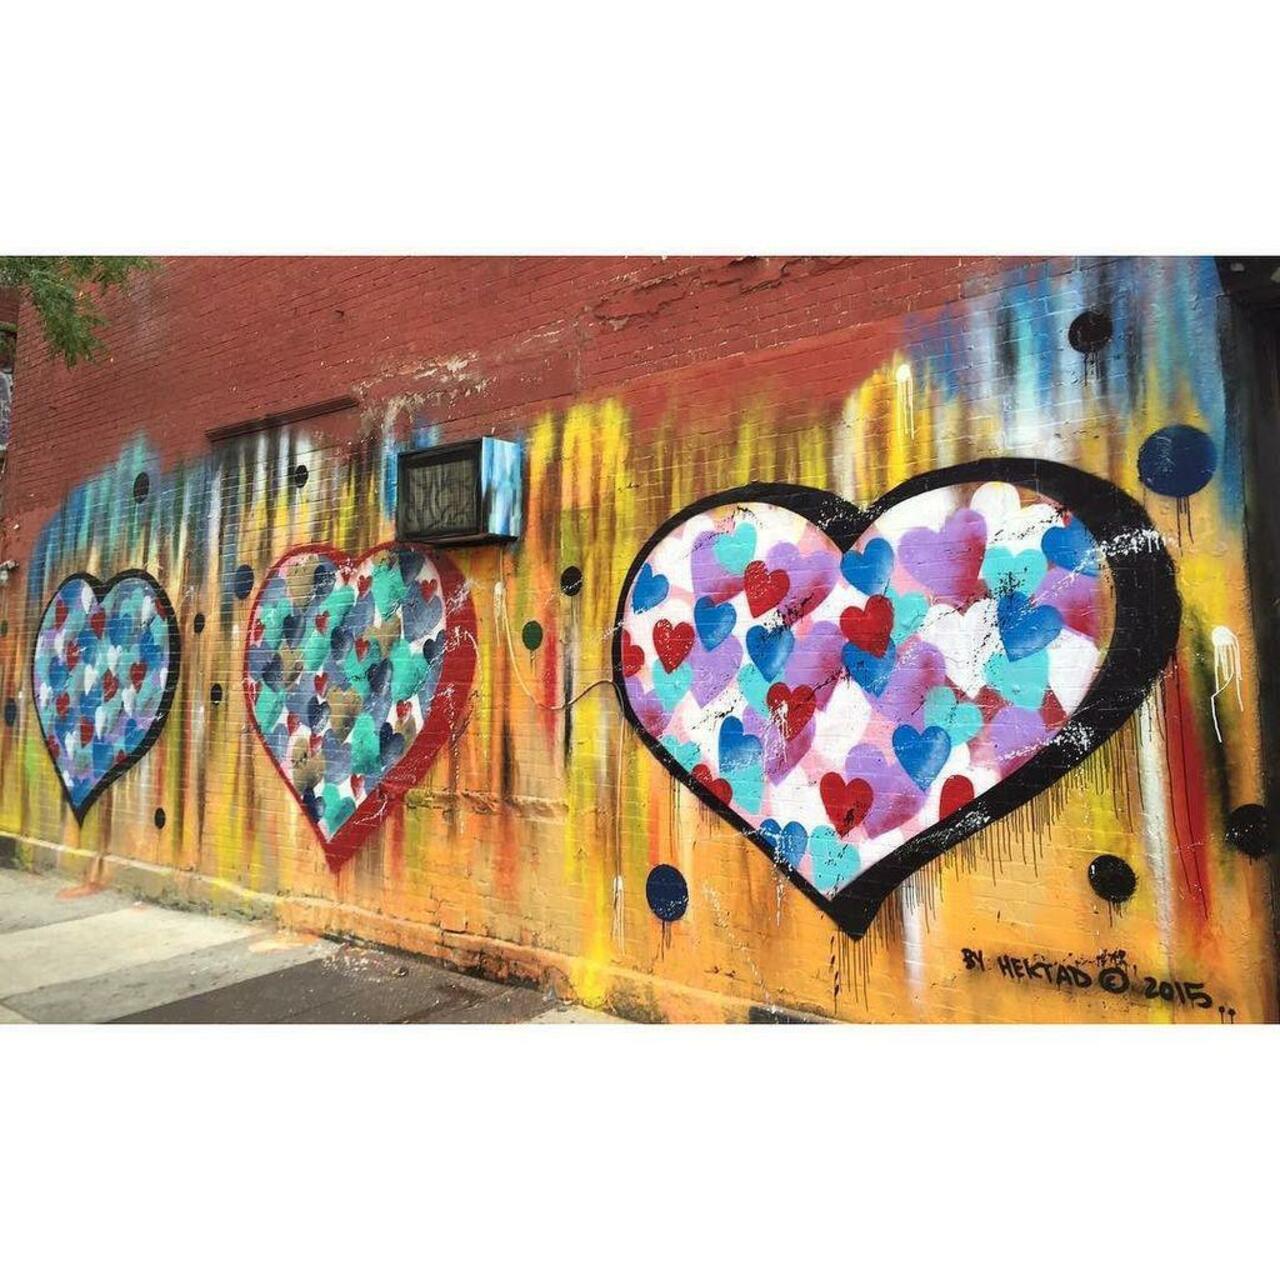 By @hektad._official #hektad 2015 #streetartnyc #streetart #colorful #hearts #graffiti #mural #wall #September13,20… http://t.co/DJj3gZ1hk3